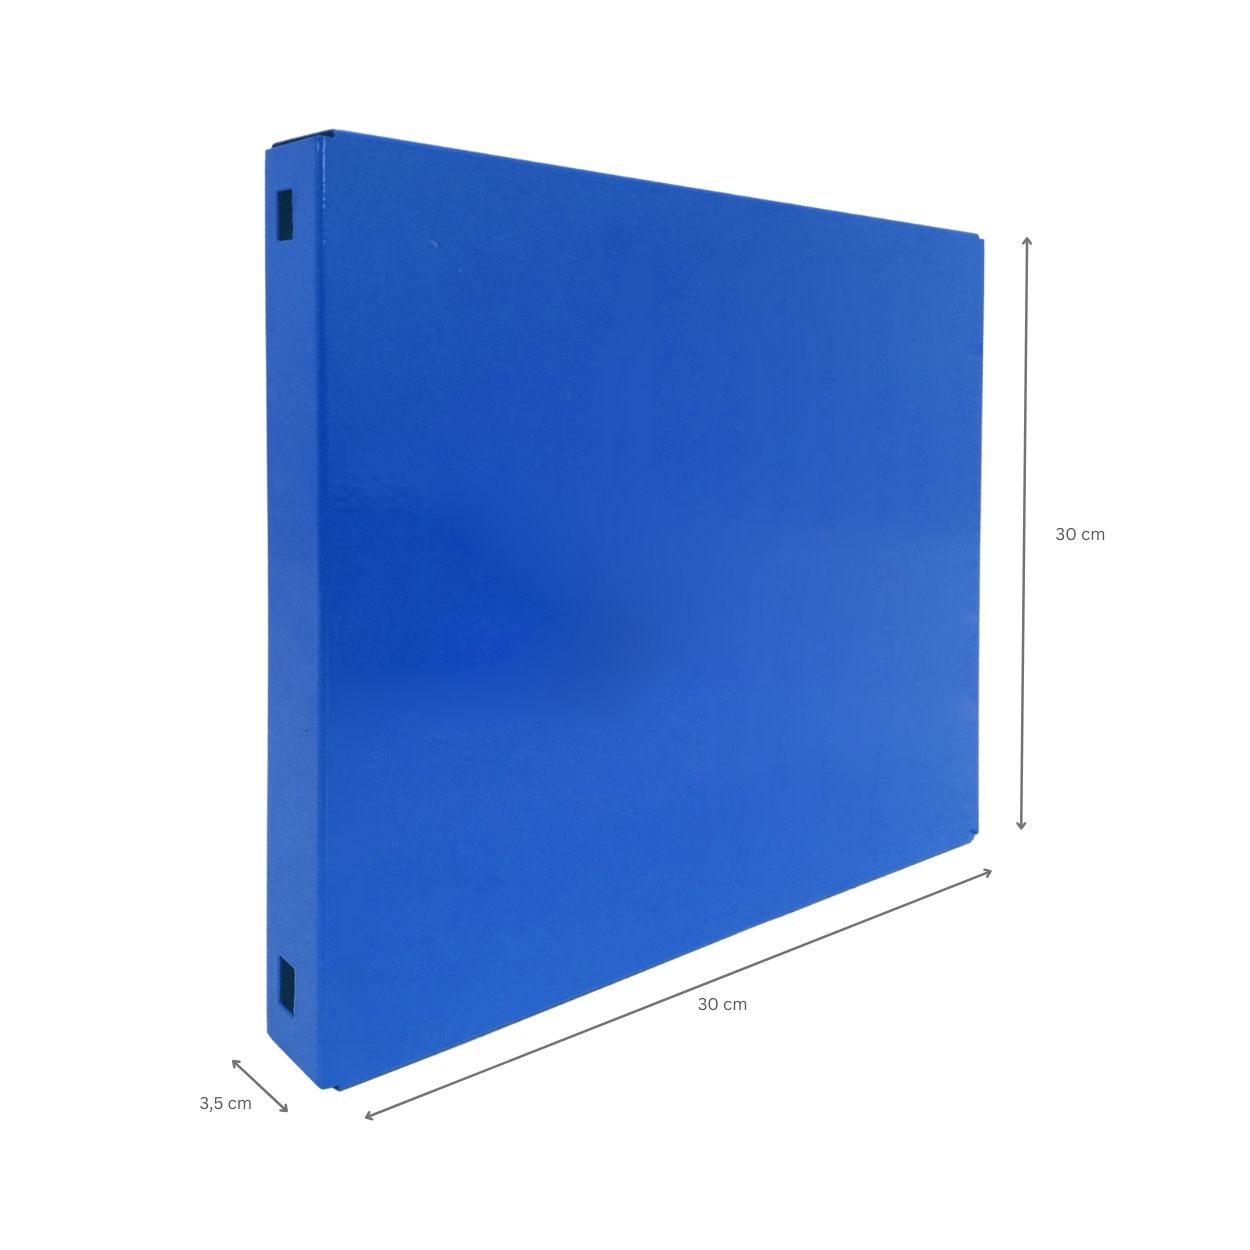 Doppelpack 2x Memoboard aus Stahl geschlossen | HxBxT 30x30x3,5cm | Blau | Wandtafel Trägersystem